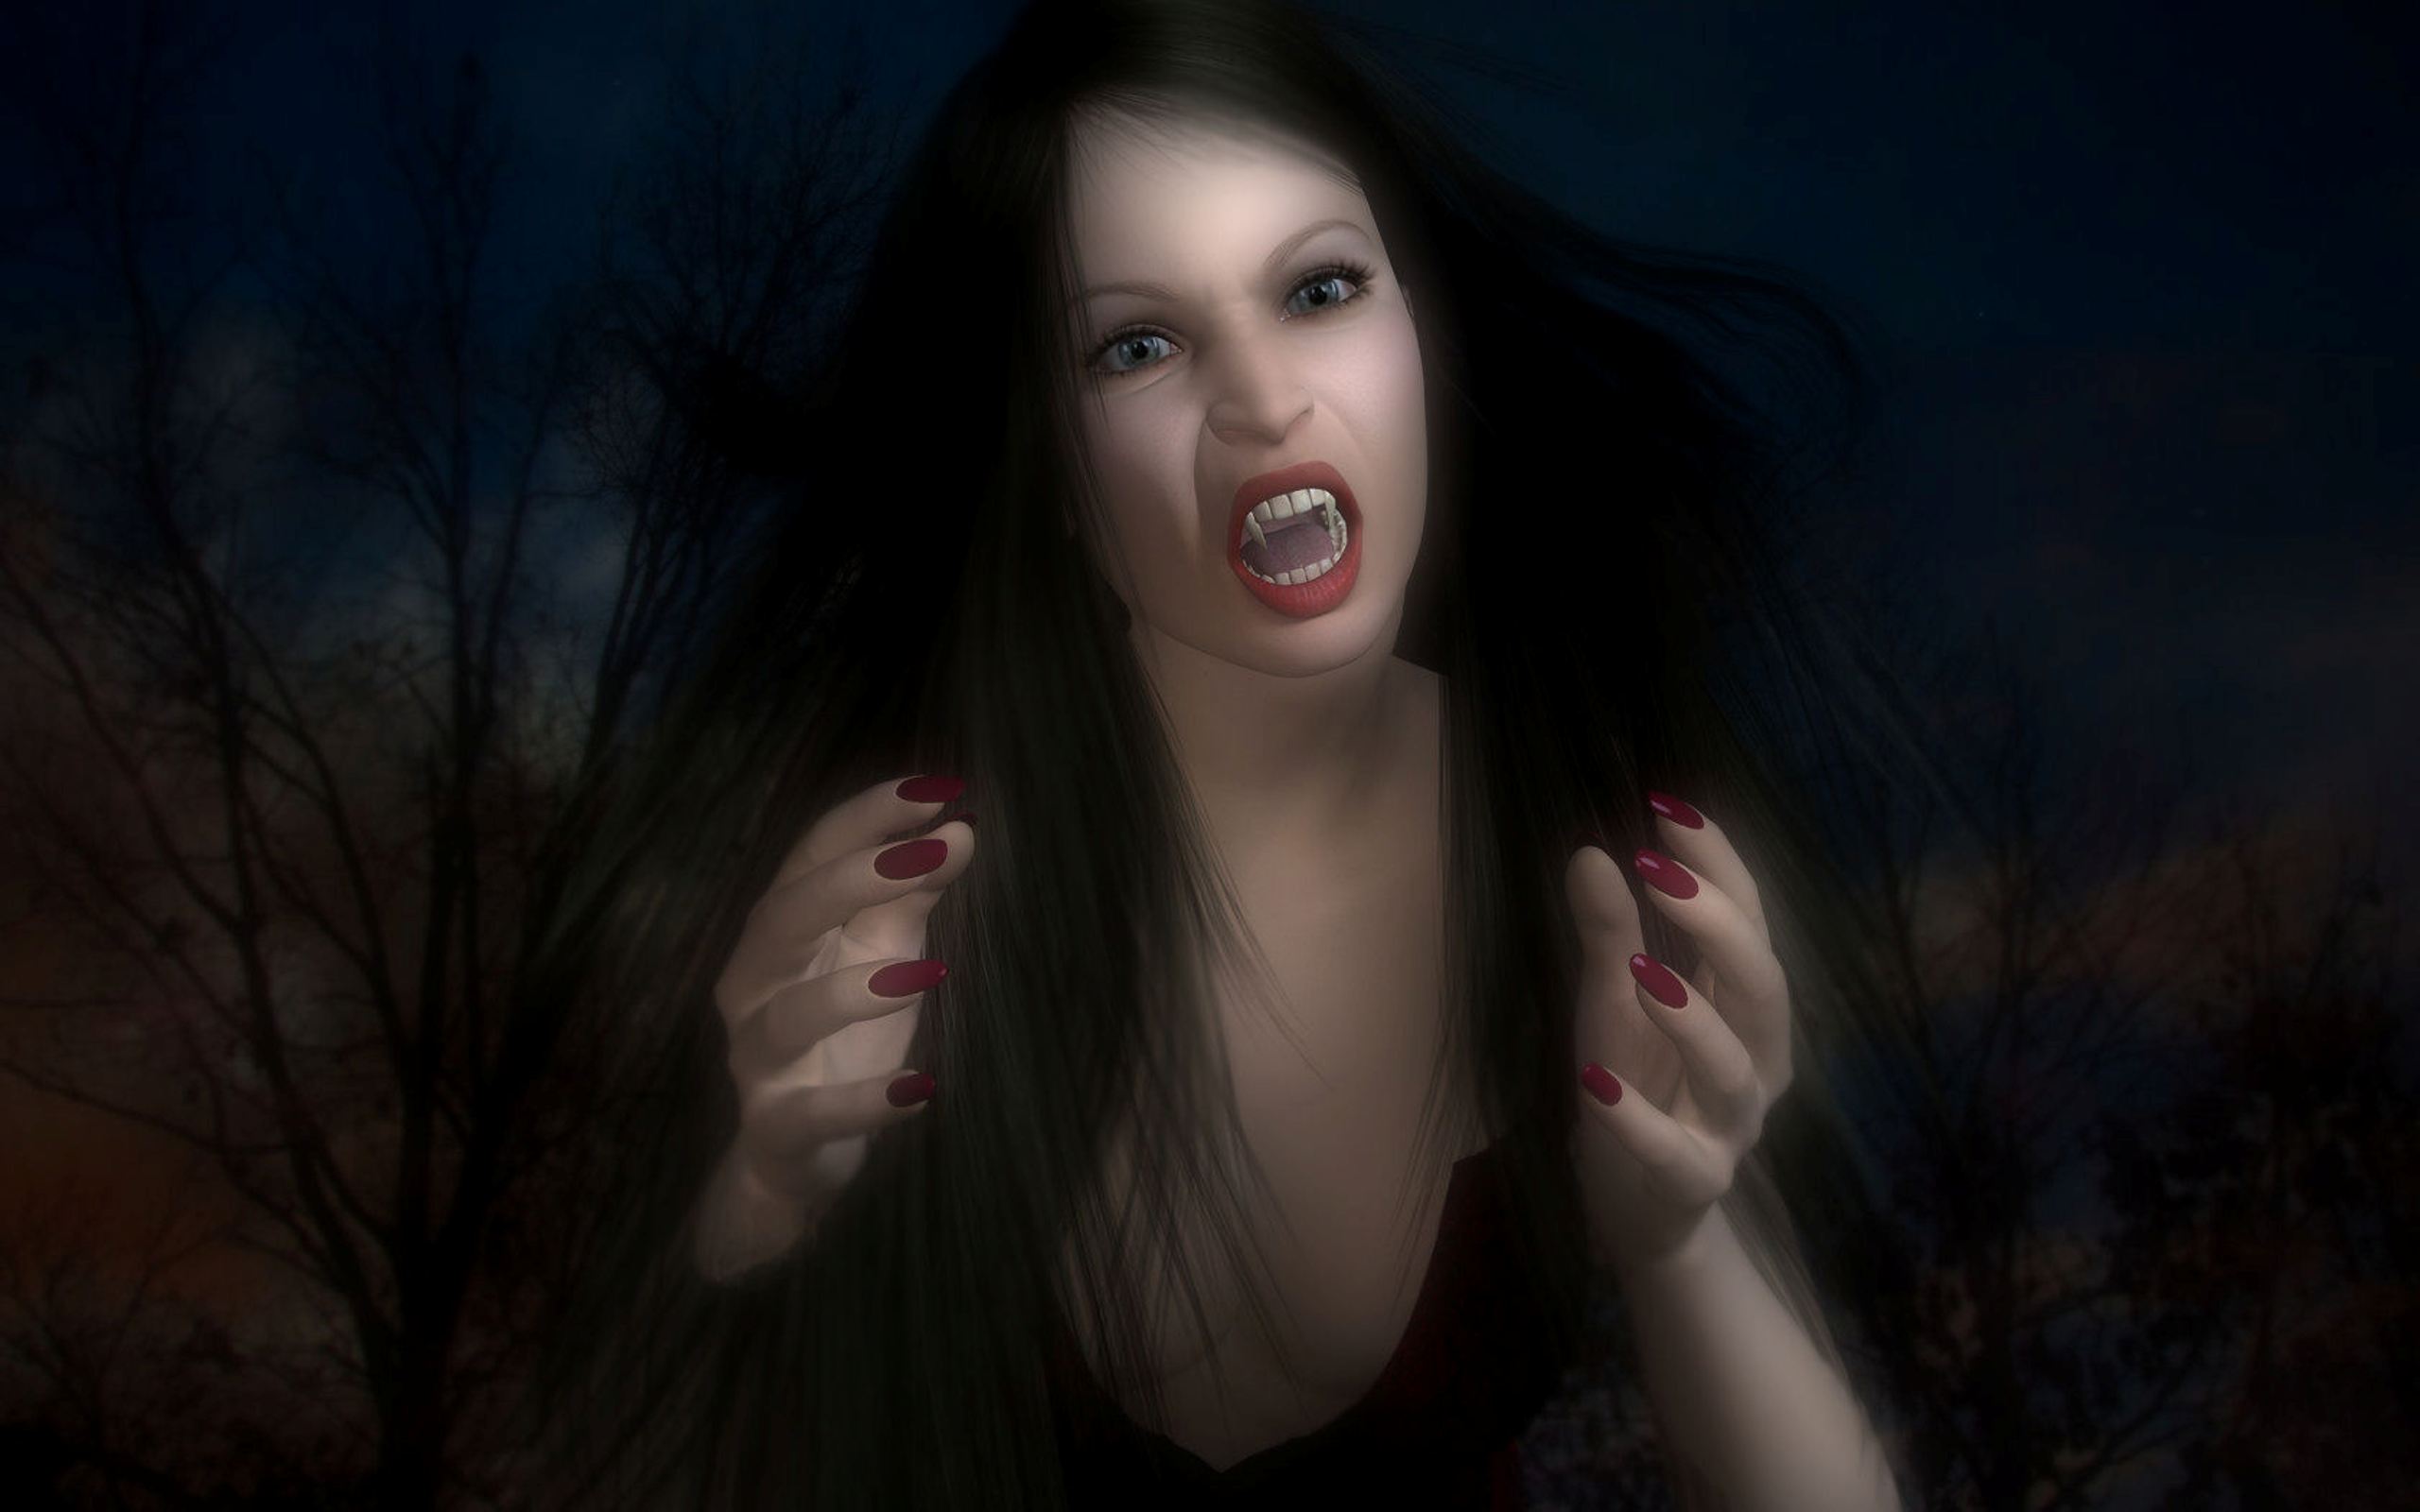 Вампиры в жизни существуют. Агнешка вампир. Девушки вампиры красивые. Красивые девушки вампирши.